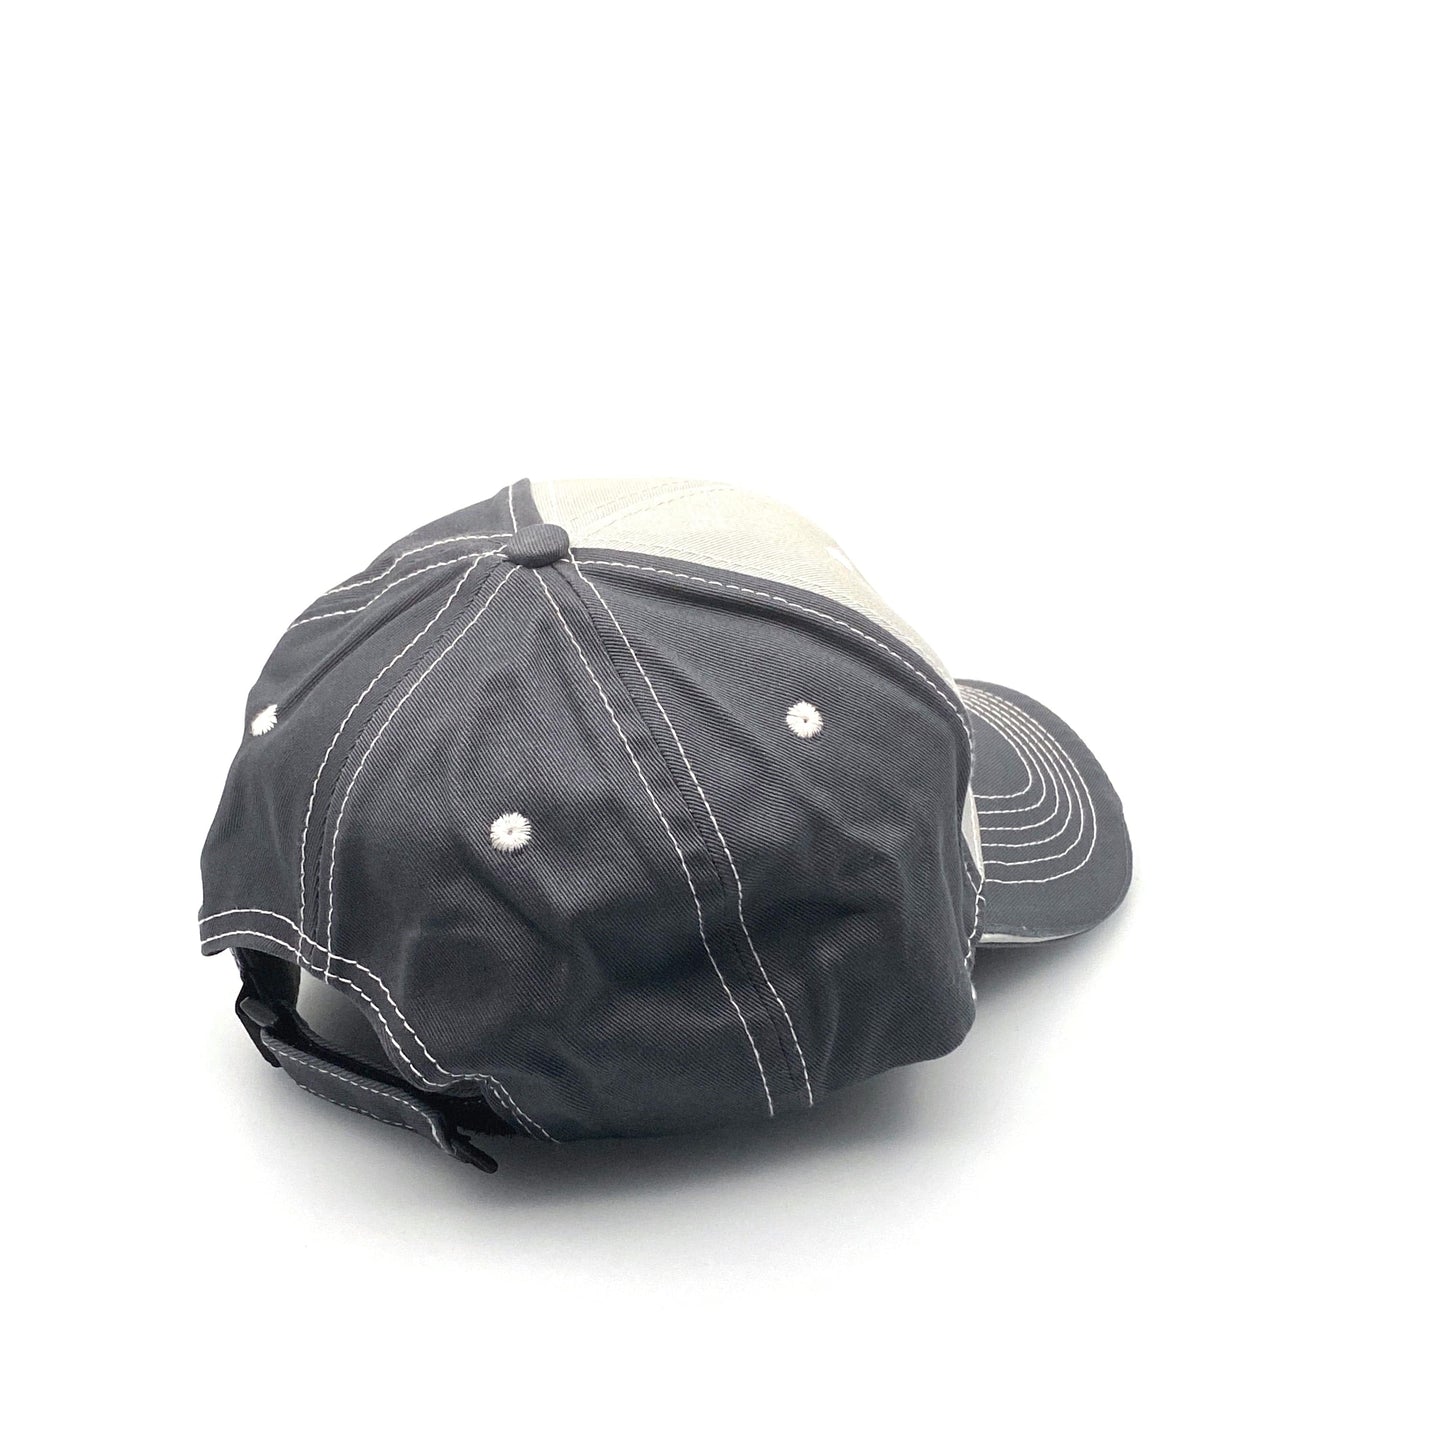 Sportsman “Pulling N” Nebraska Hat Adjustable Gray Baseball Cap